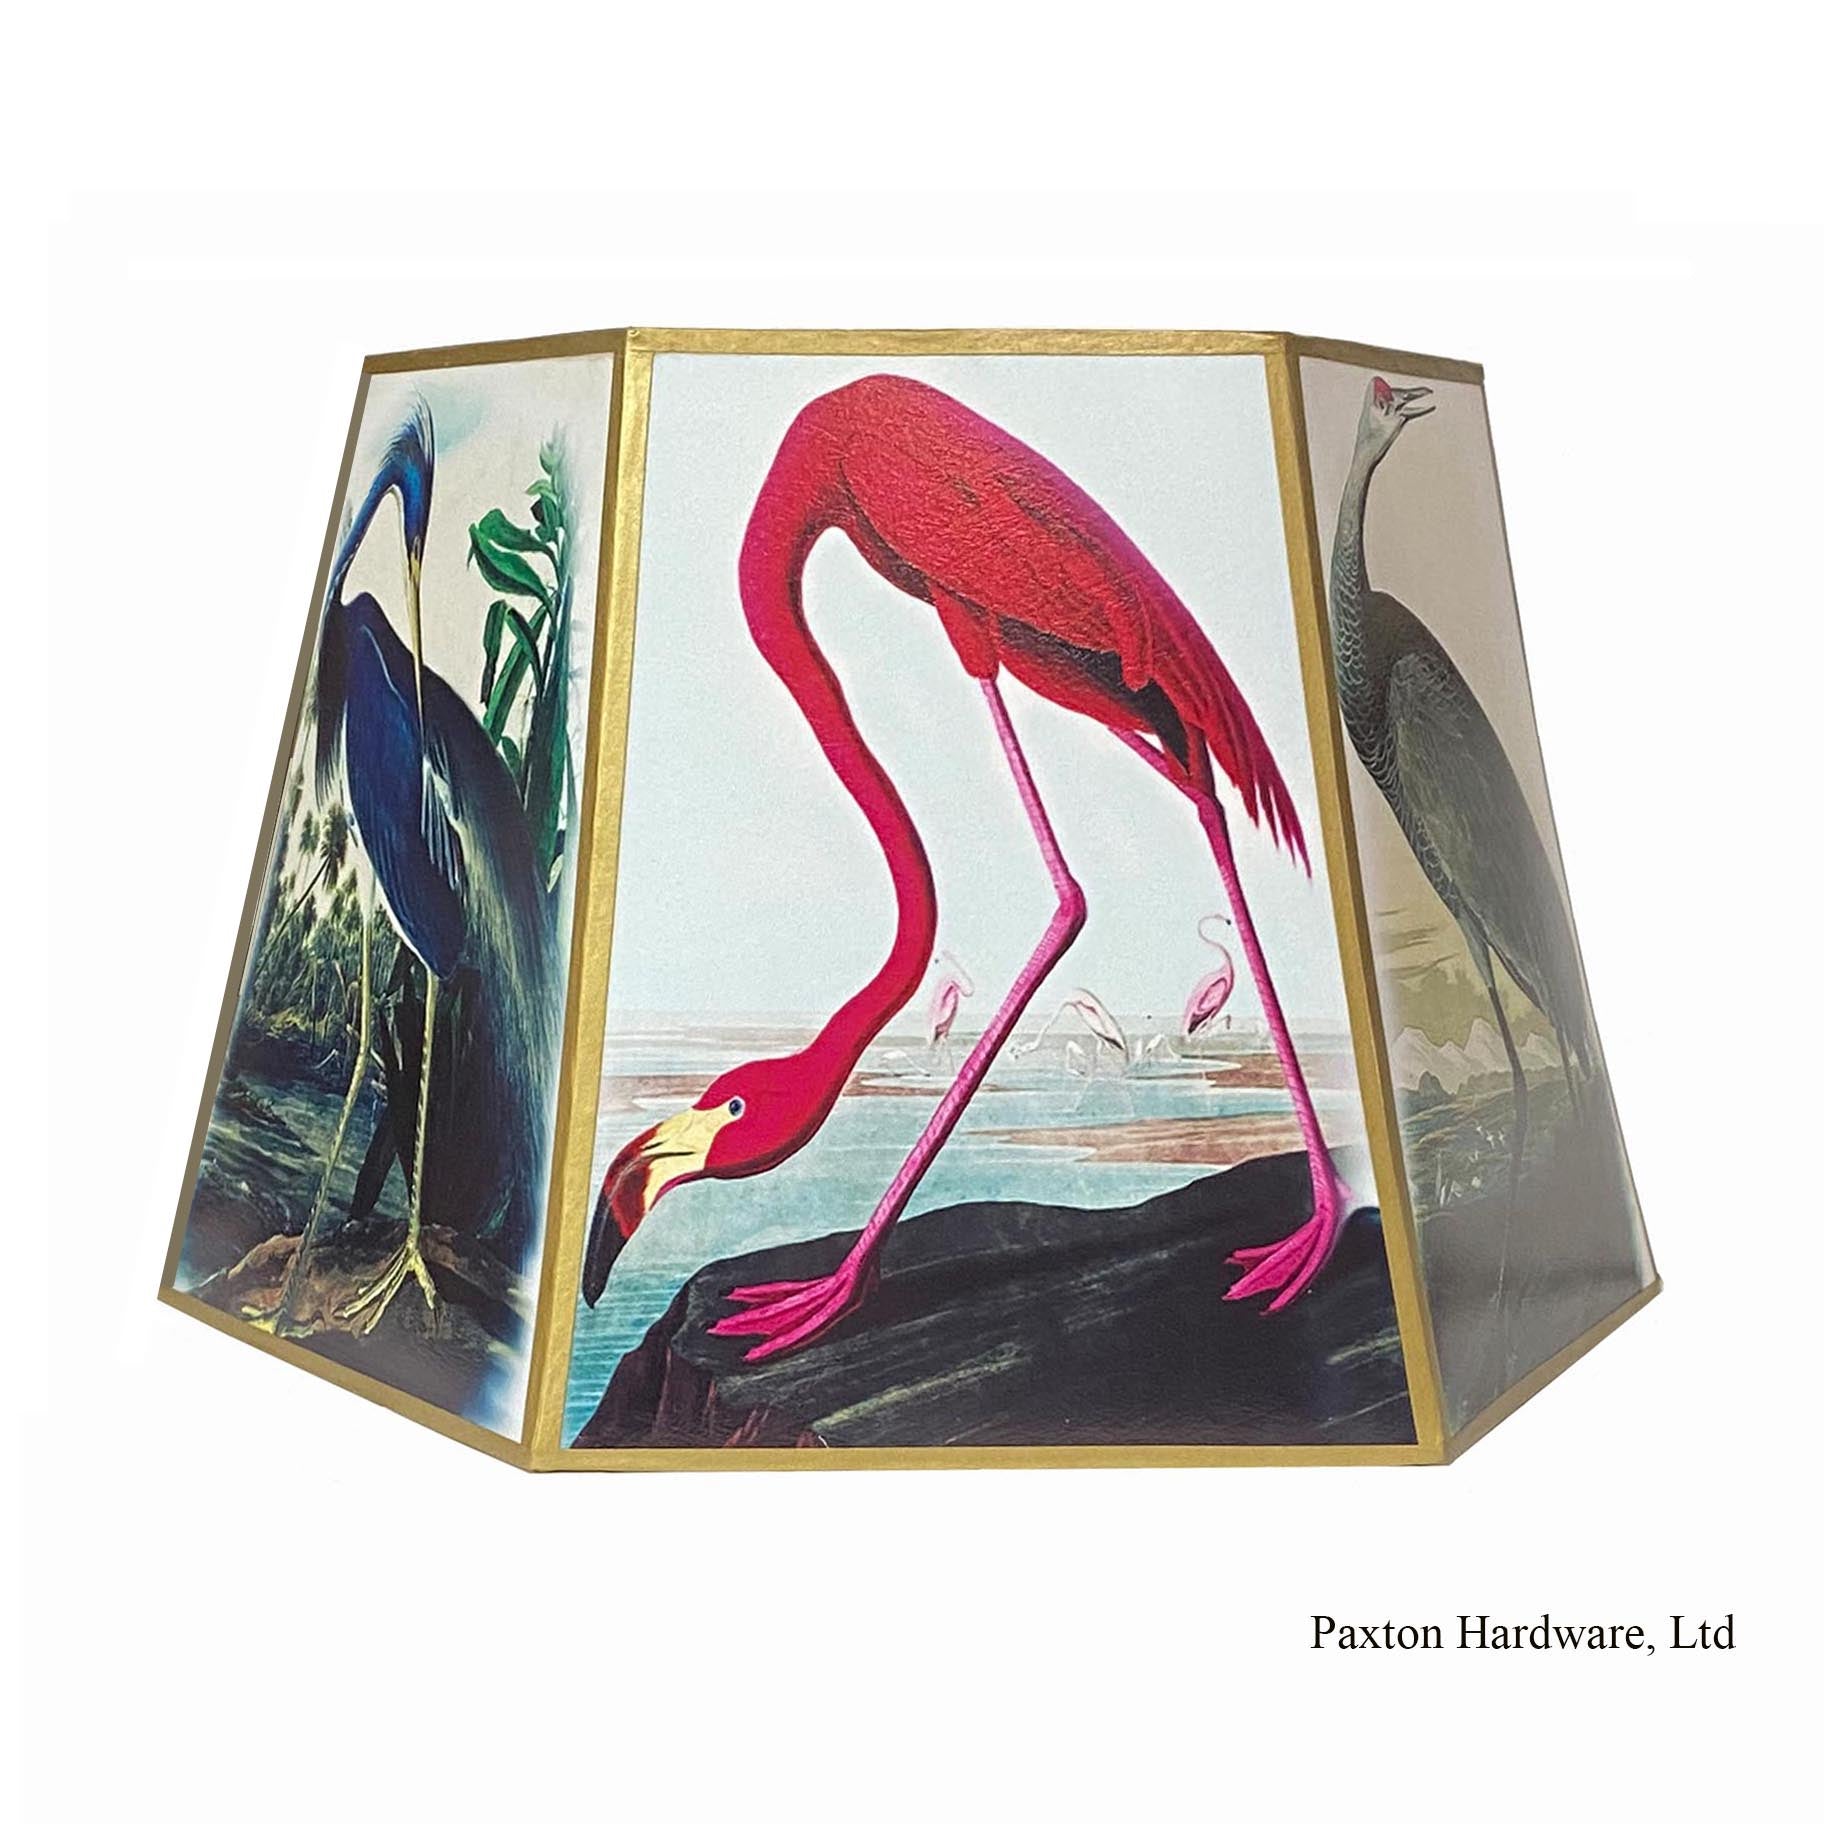 Flamingo & Heron Lamp Shade, Paxton hardware ltd